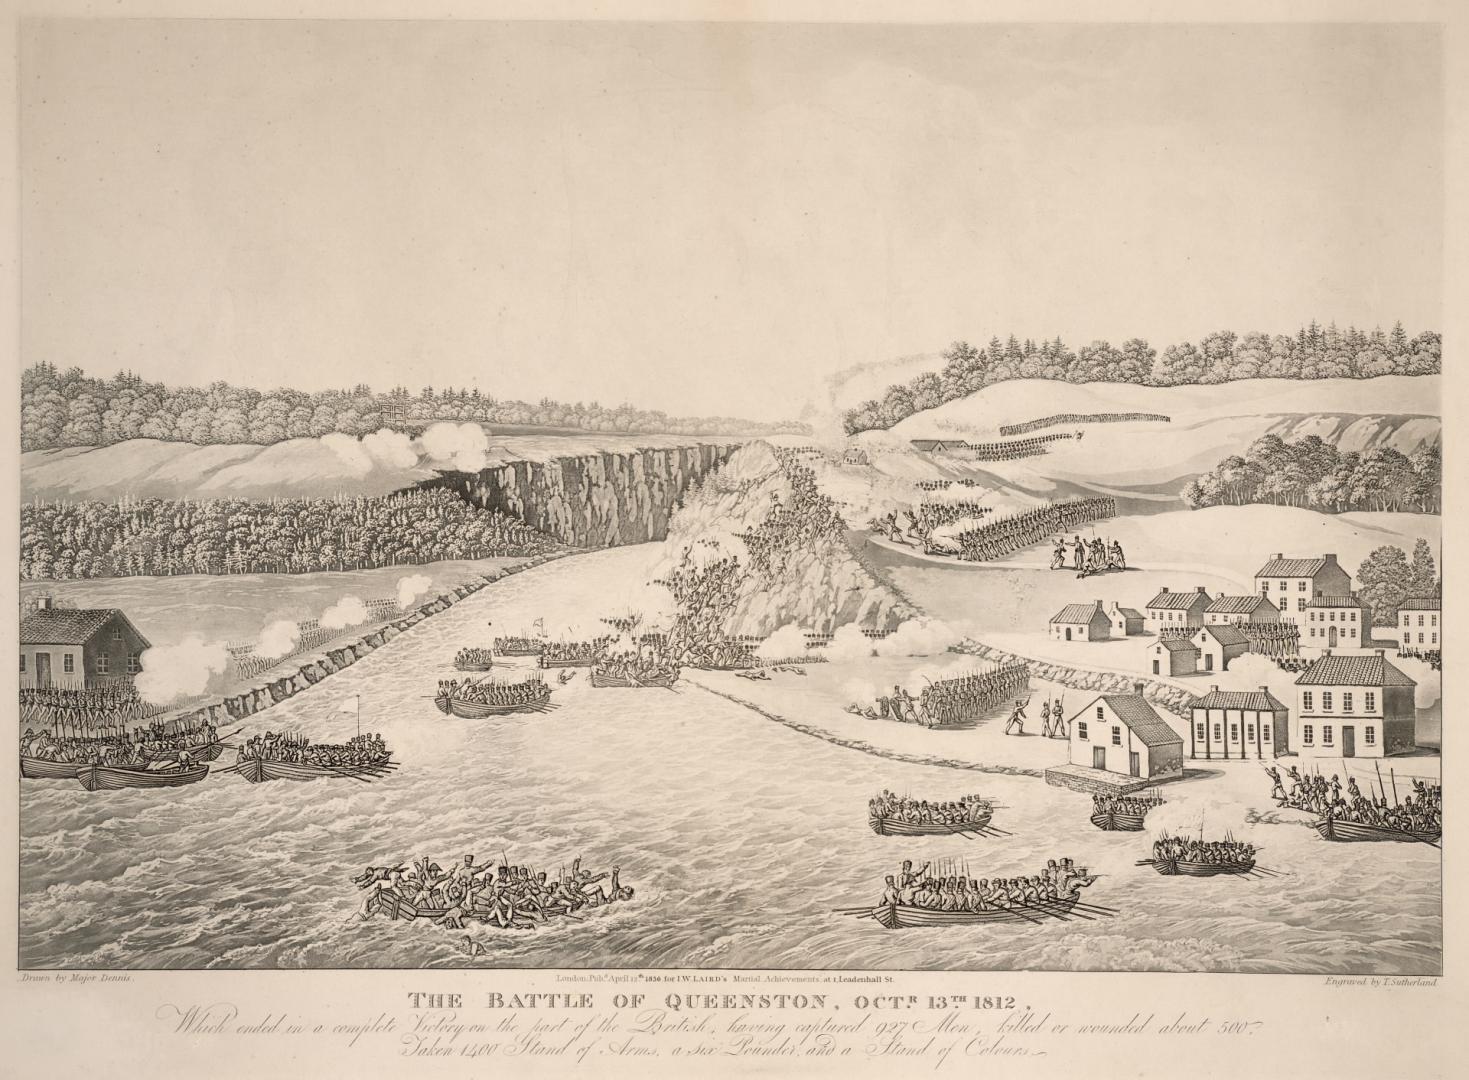 The Battle of Queenston (Niagara-on-the-Lake, Ontario), October 13th, 1812